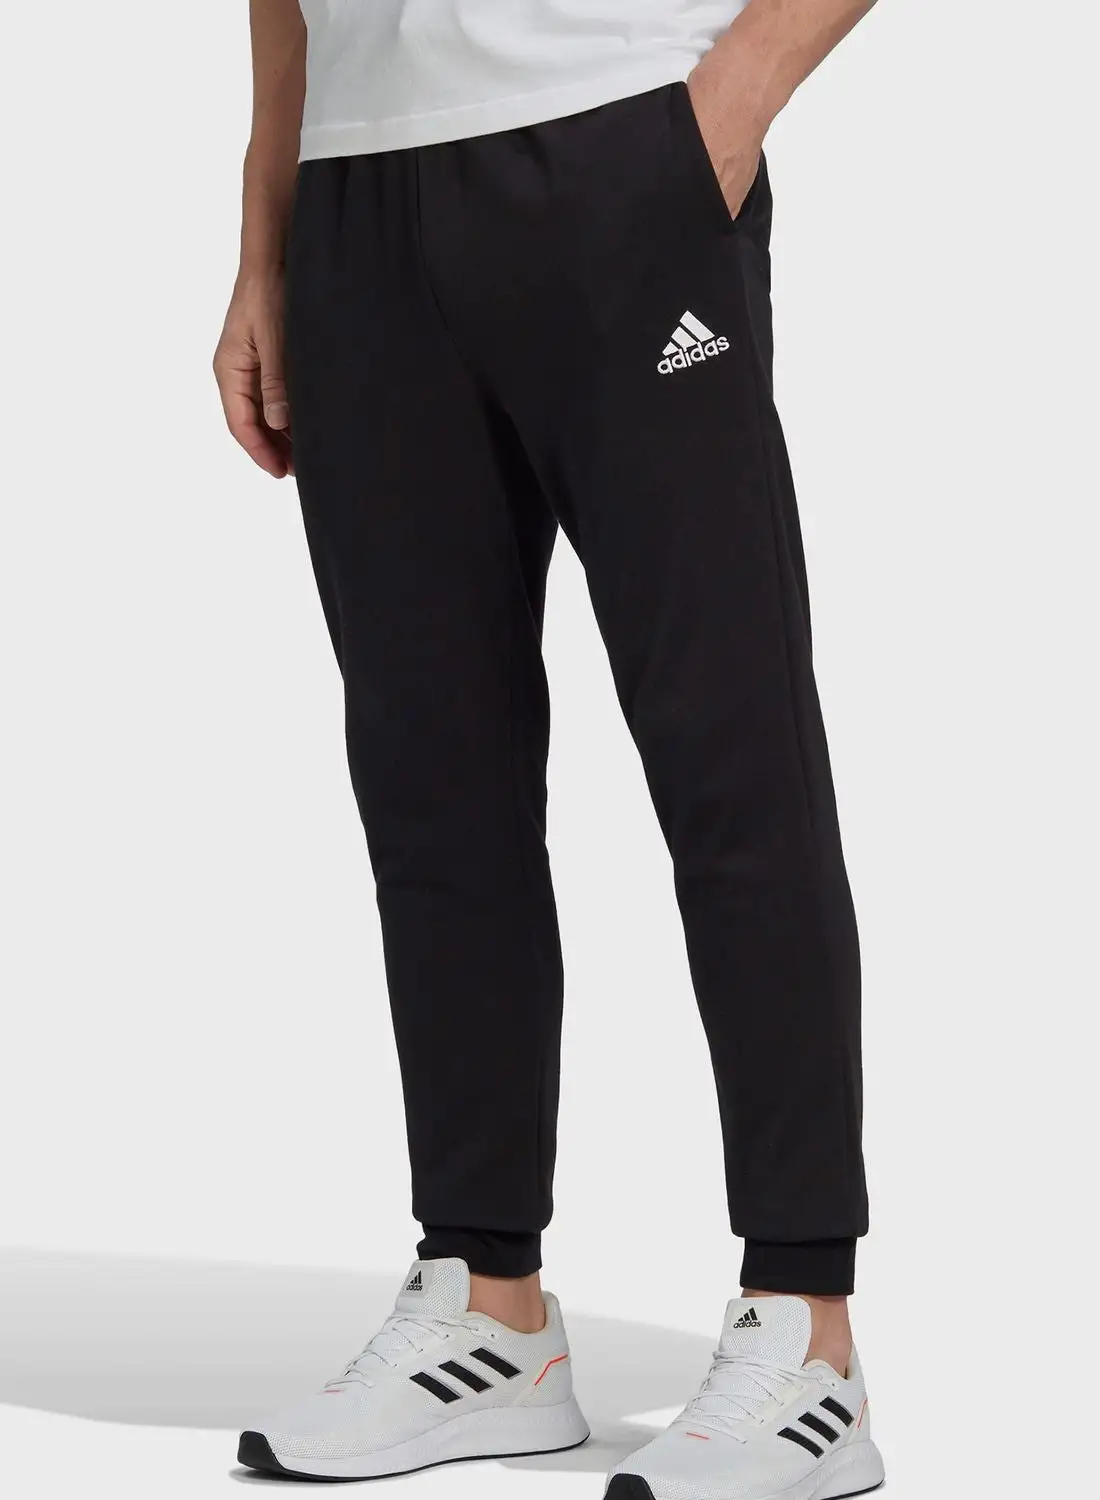 Adidas Fleecozy Sweatpants